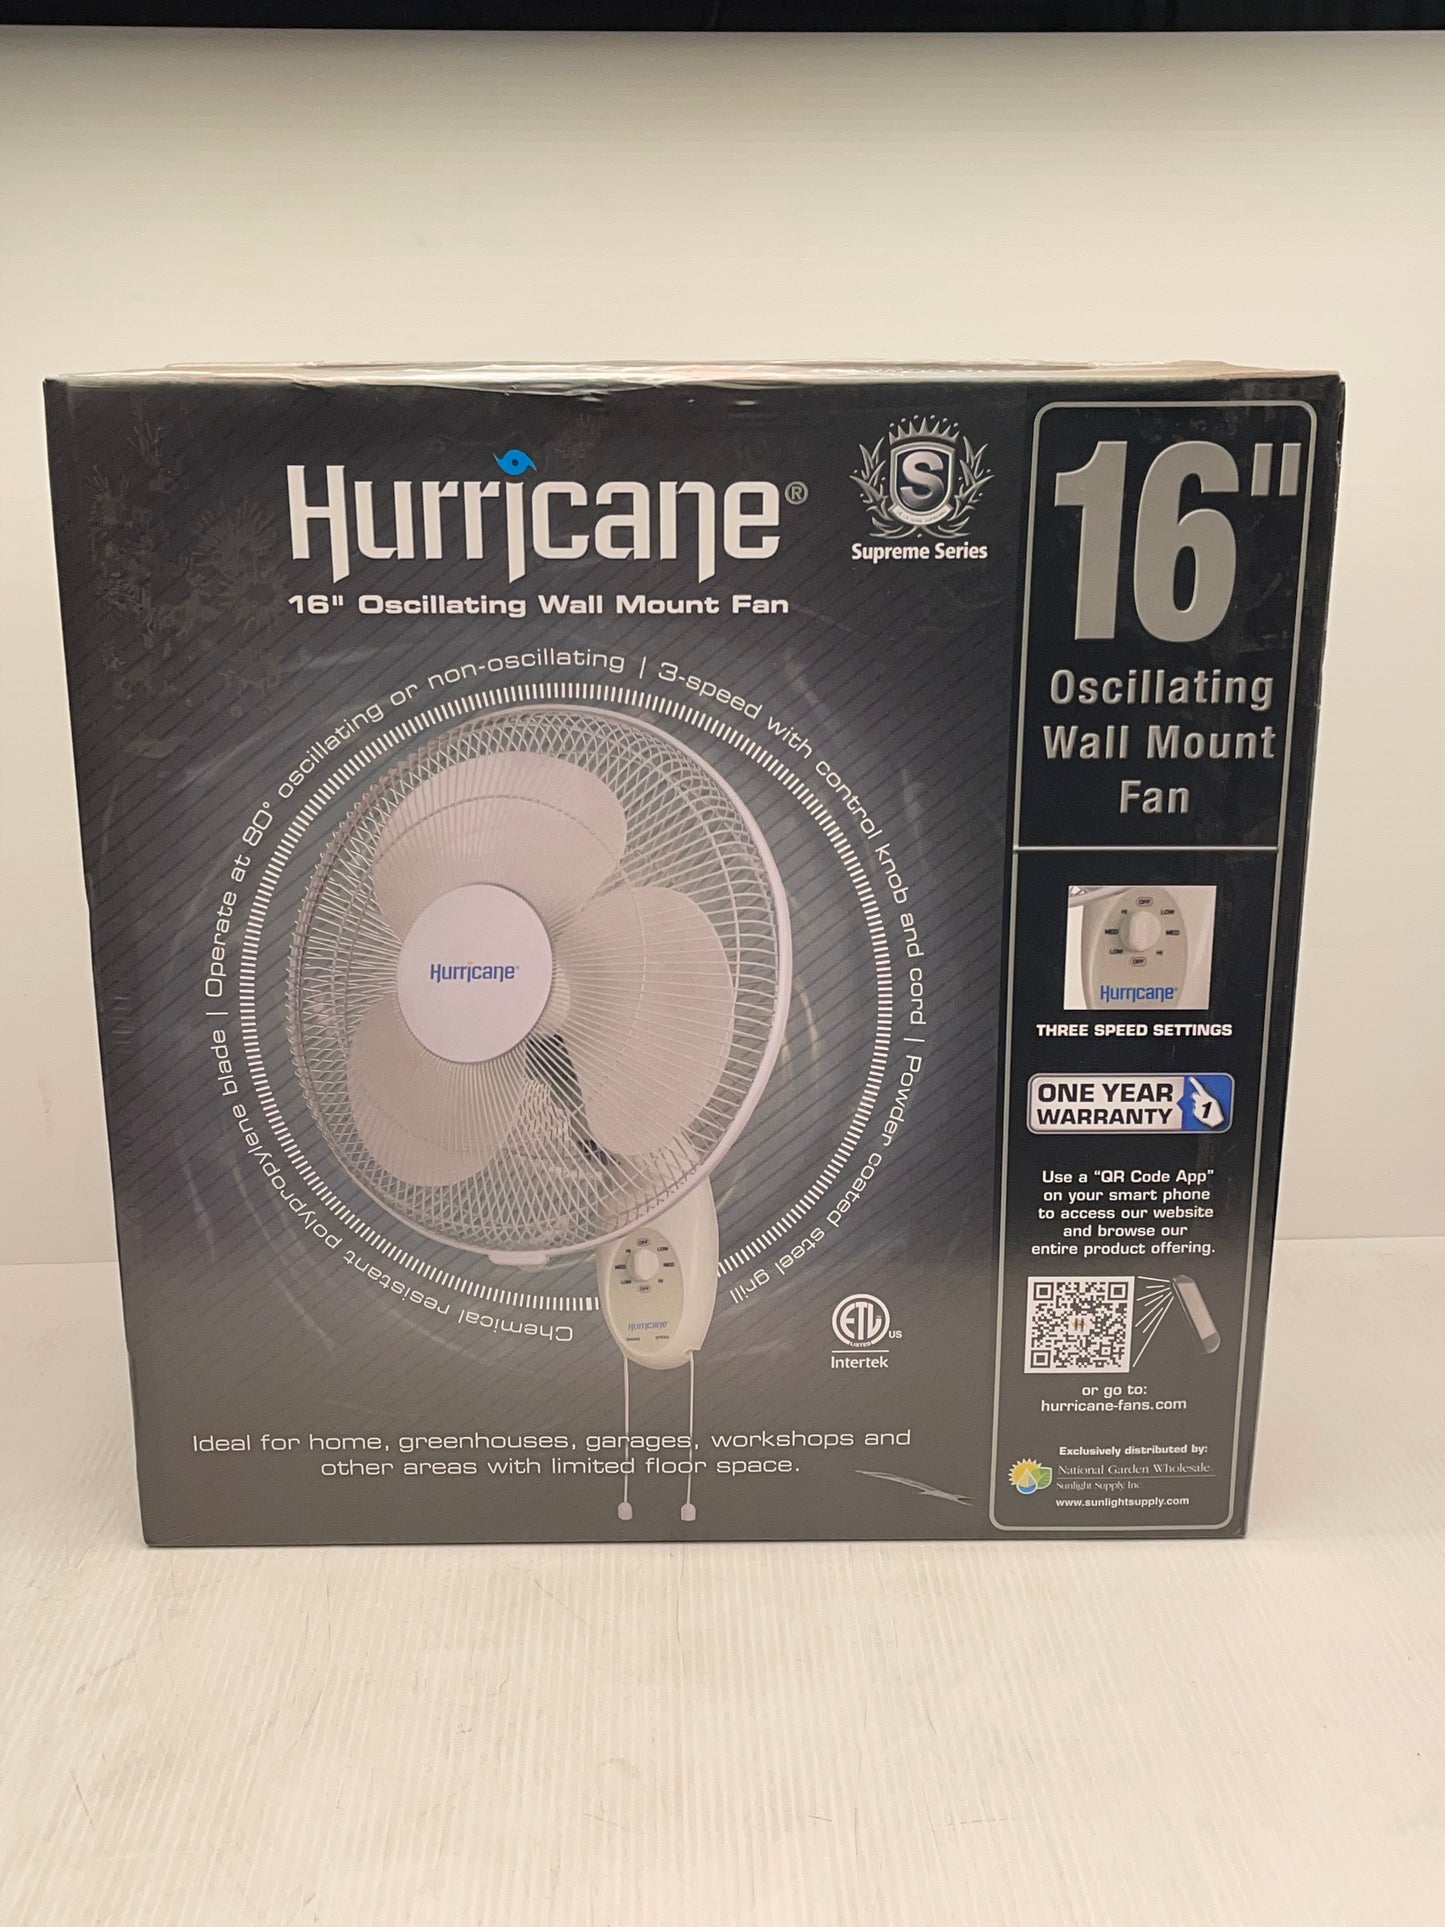 Hurricane 16" Oscillating Wall Mount Fan